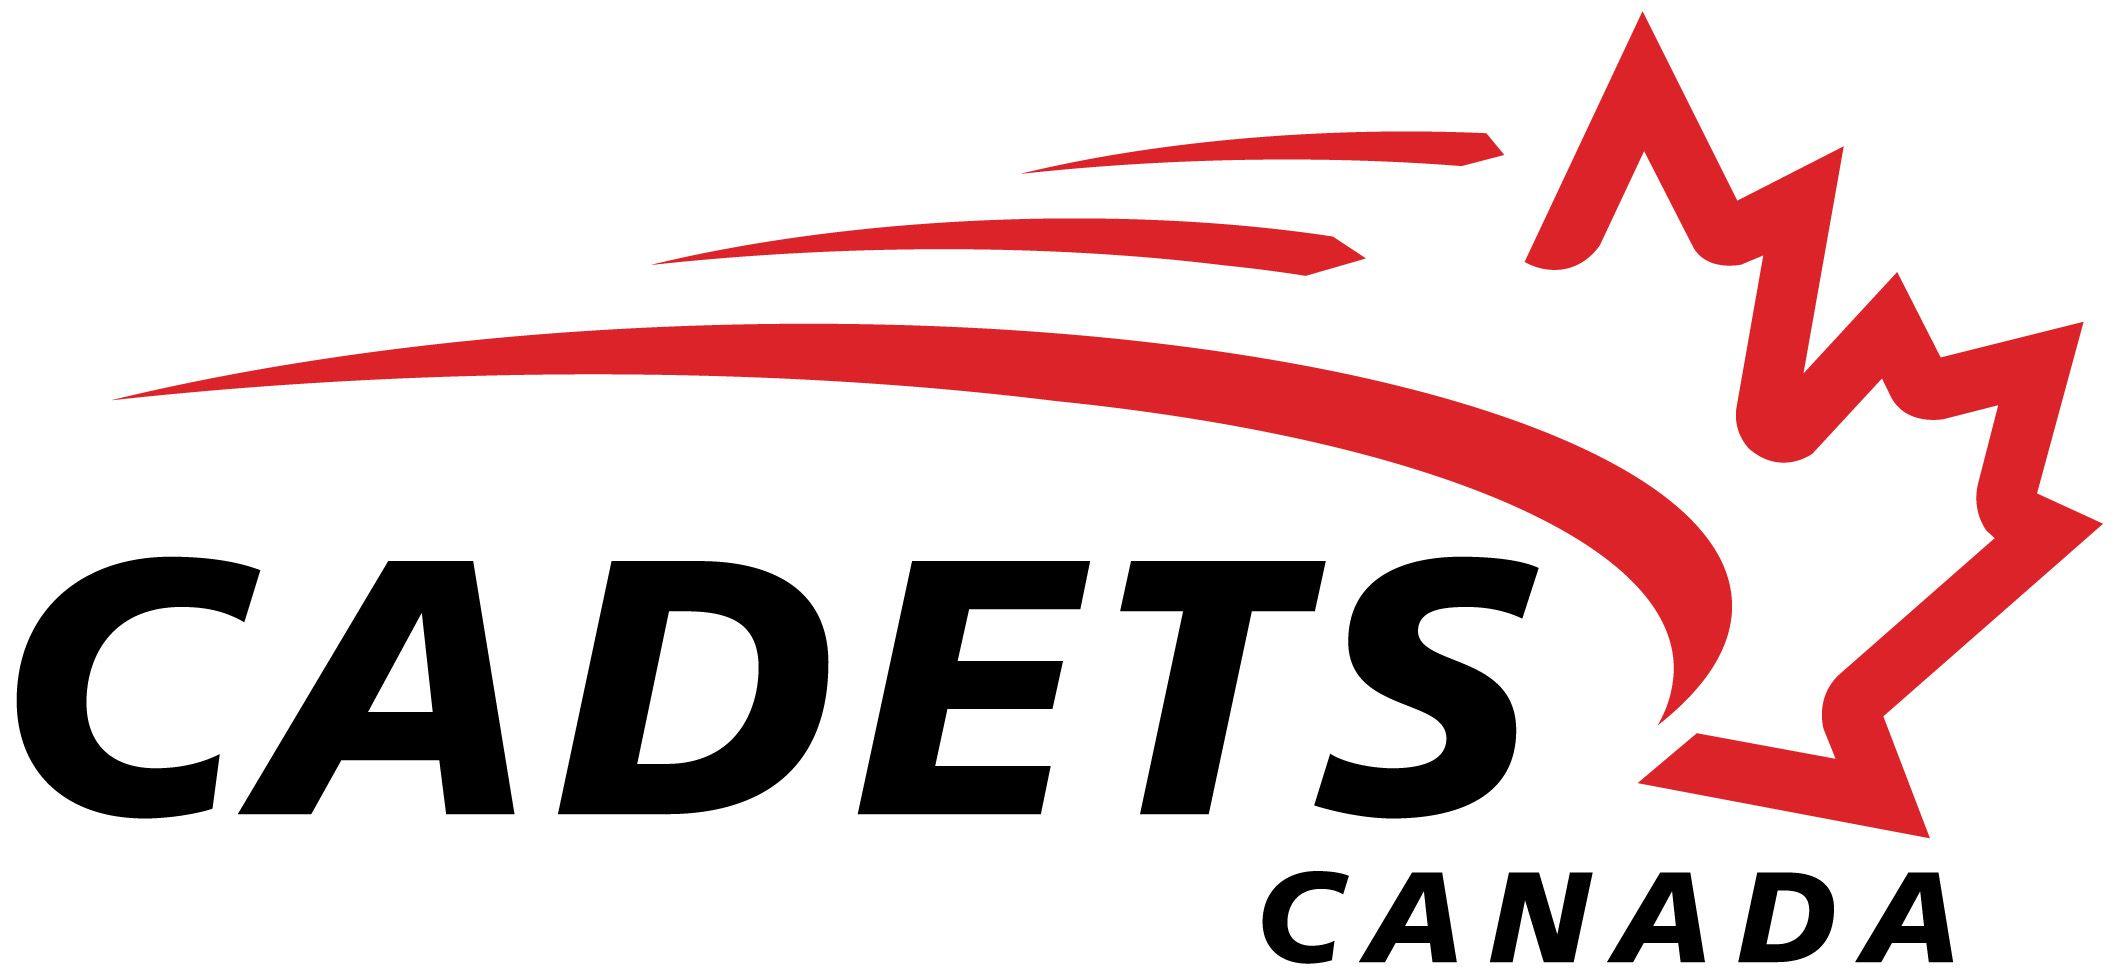 Cadet Logo - cadet logo canada | art canadian | Logos, Company logo, Tech companies